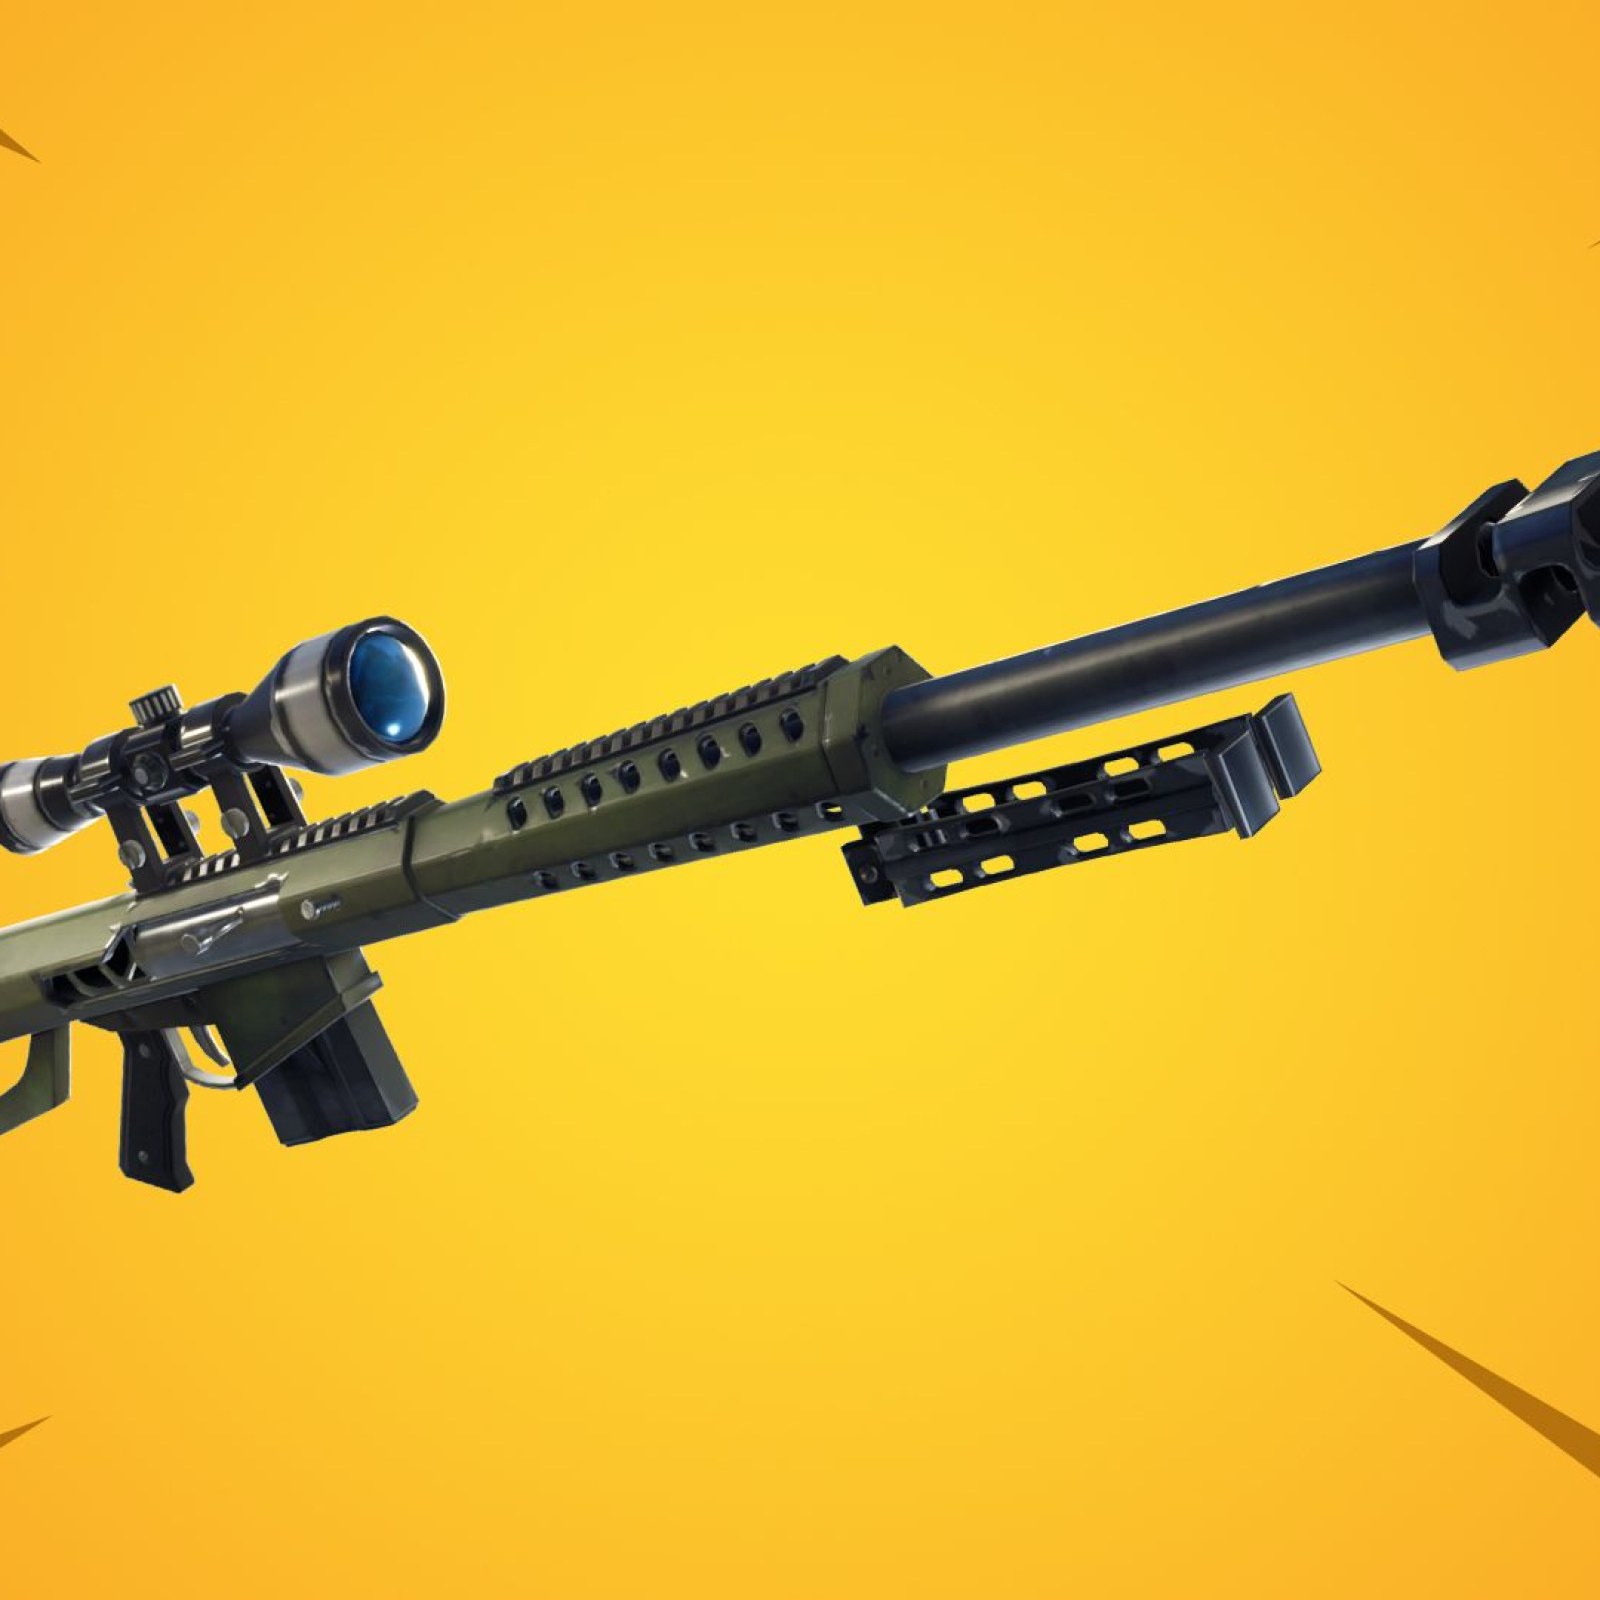 Fortnite' Update 12.50 Nerfs Heavy Sniper & Aim Assist - Patch Notes